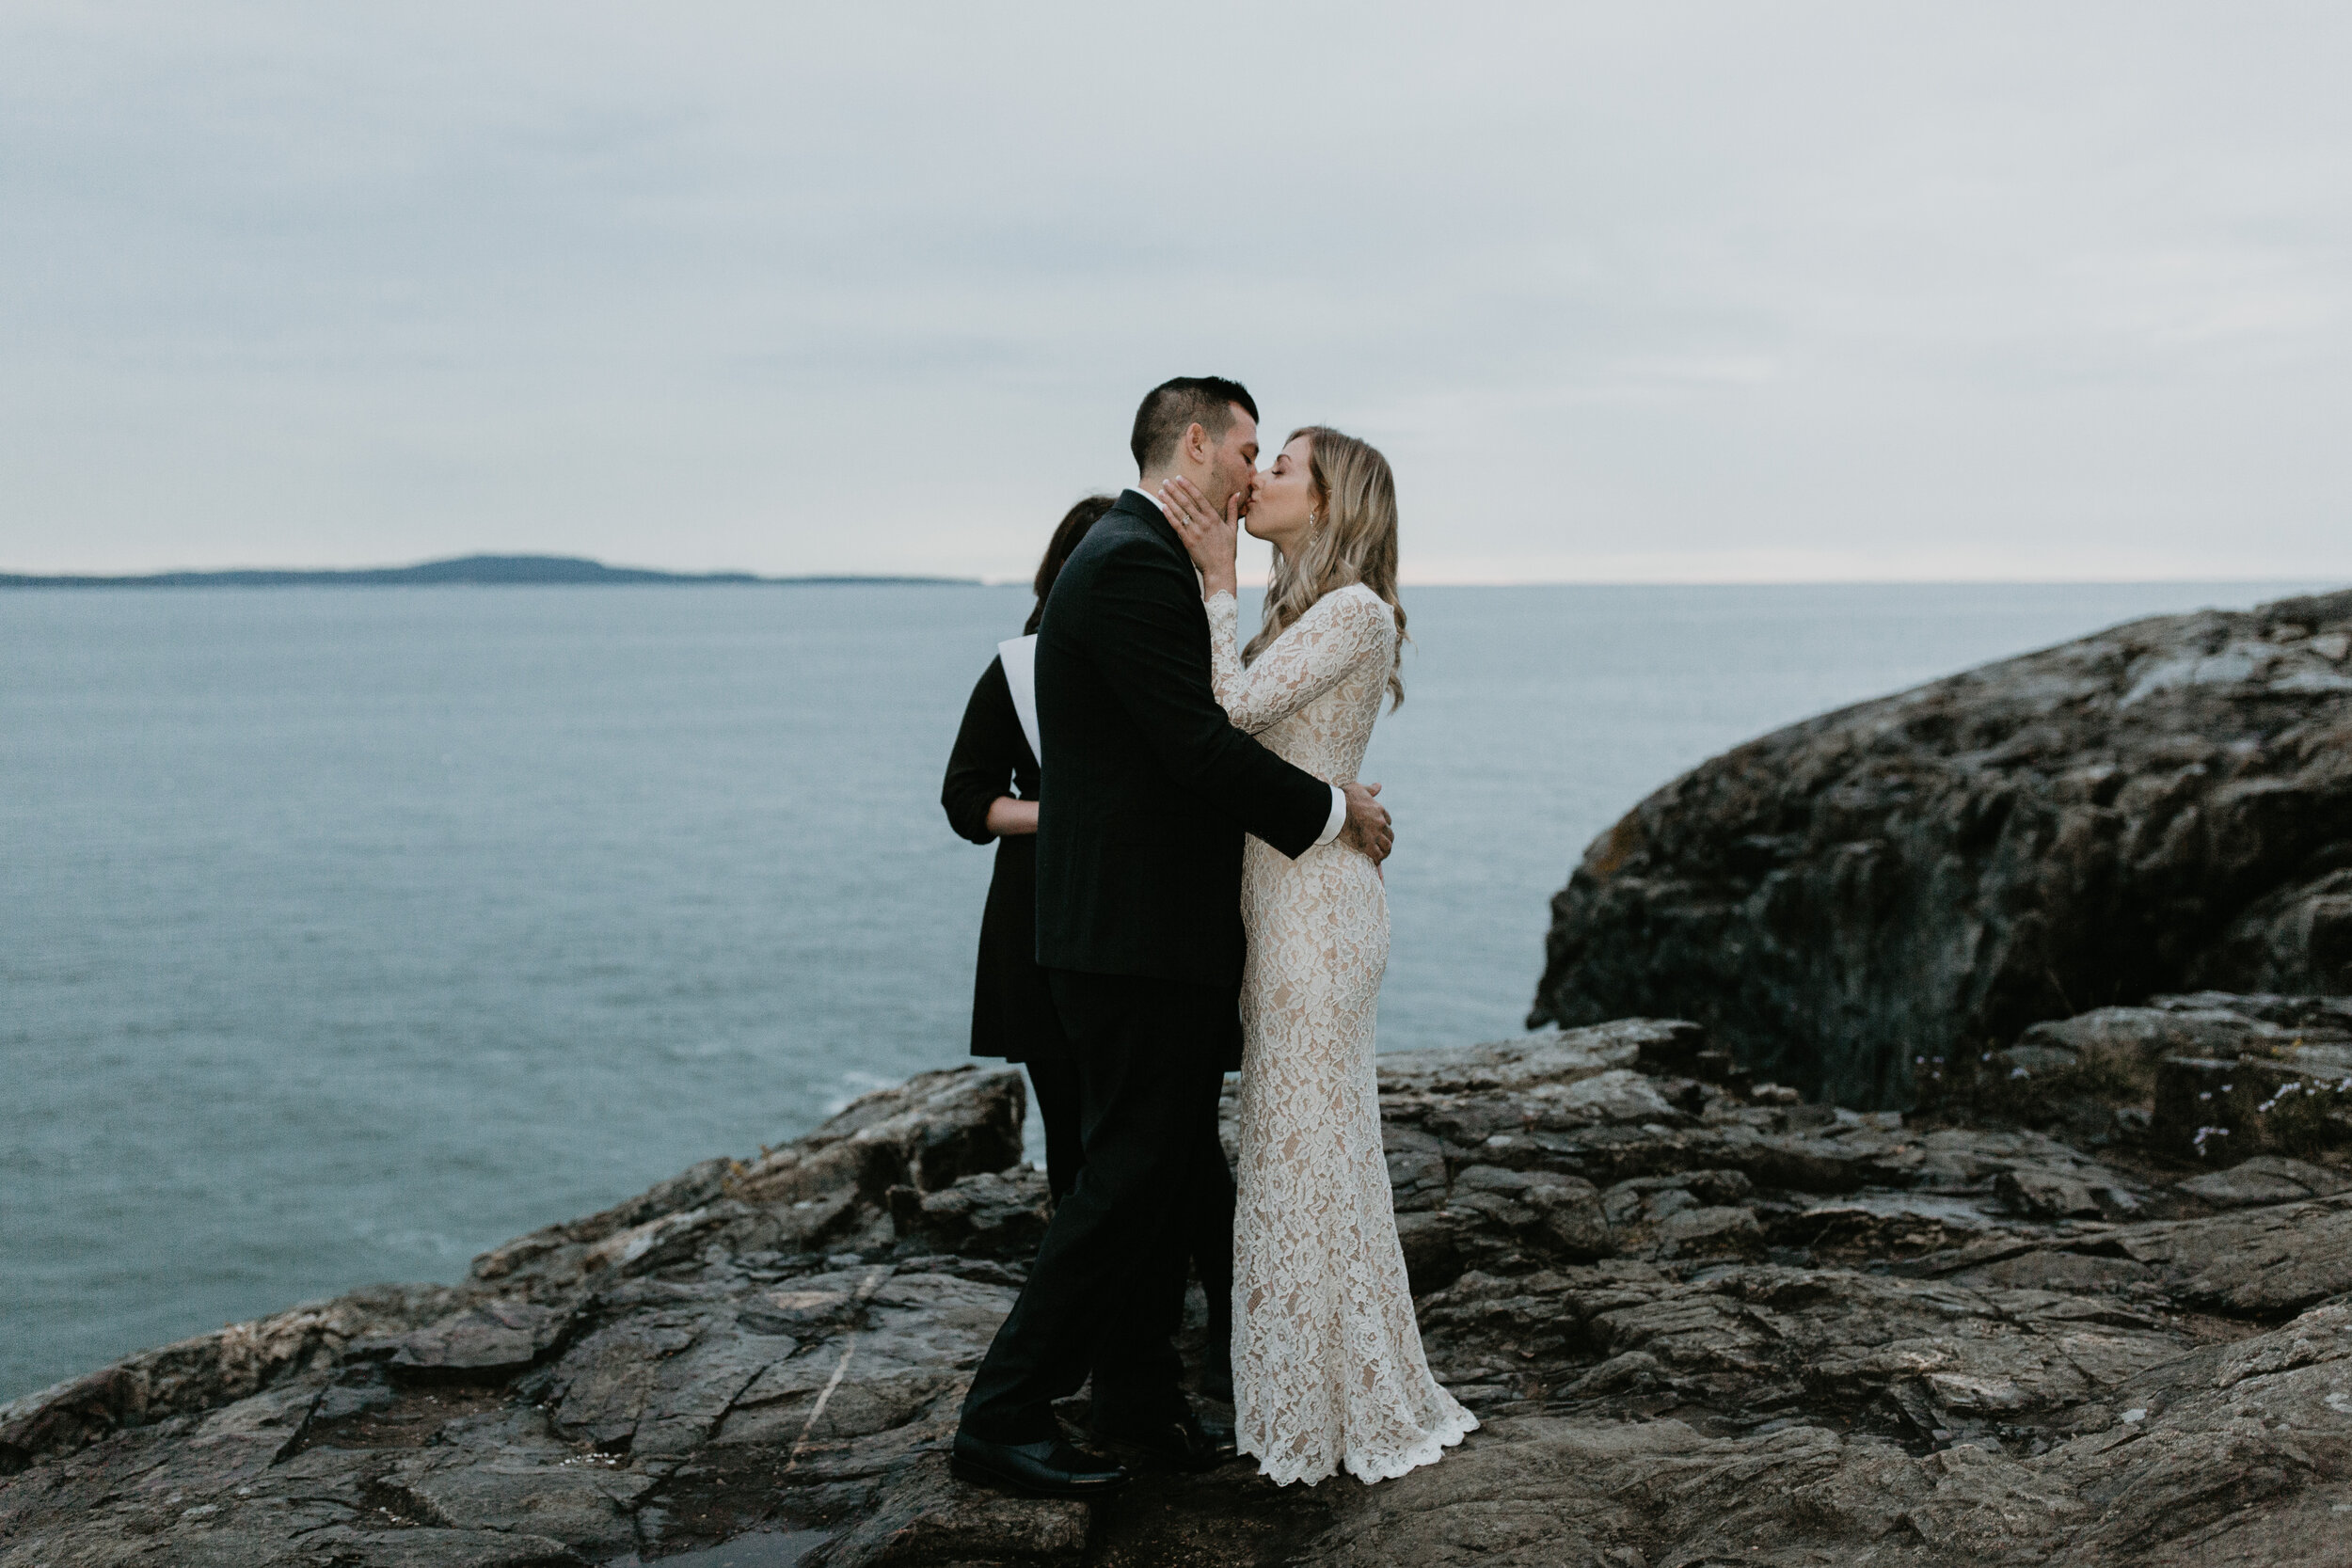 Nicole-Daacke-Photography-Acadia-national-park-elopement-photography-elopement-in-acadia-inspiration-maine-intimate-wedding-destination-elopement-photographer-rainy-day-maine-coast-bar-harbor-elopement-photography-116.jpg